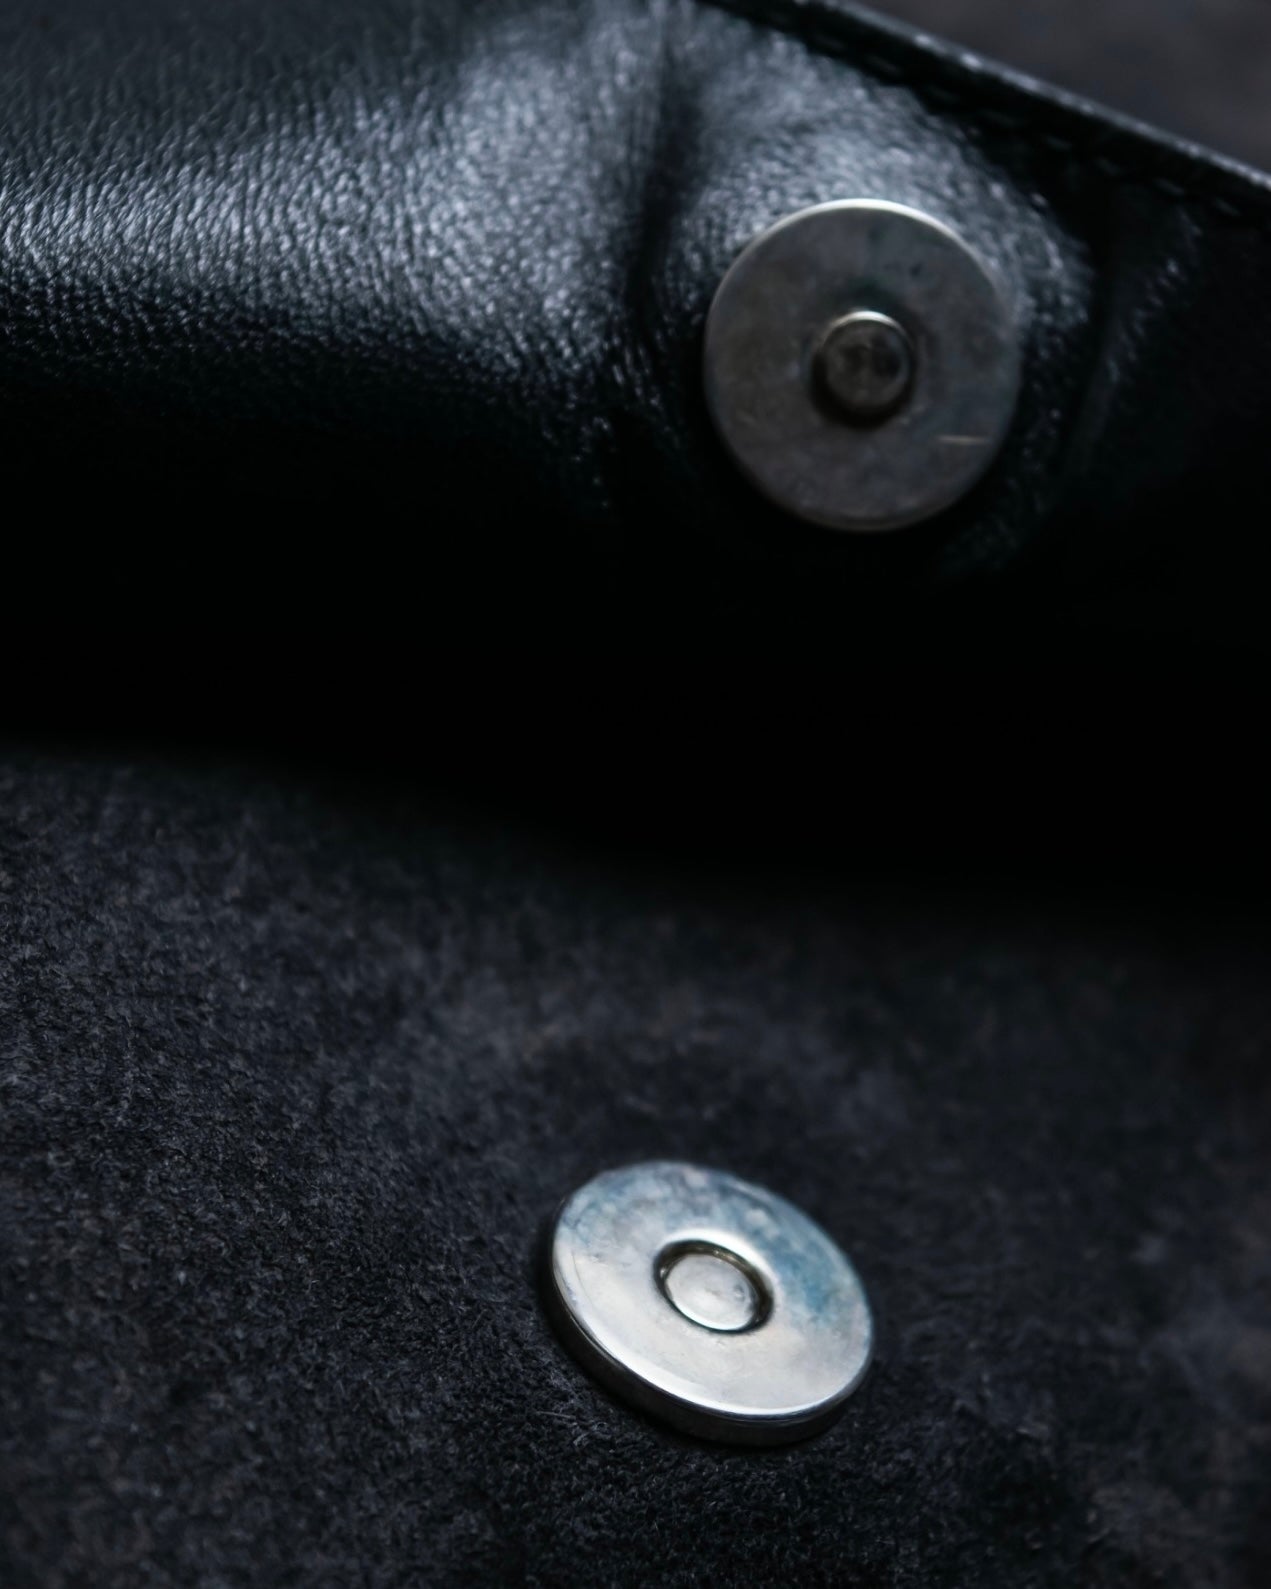 "JIL SANDER" Beautiful suede leather handbag